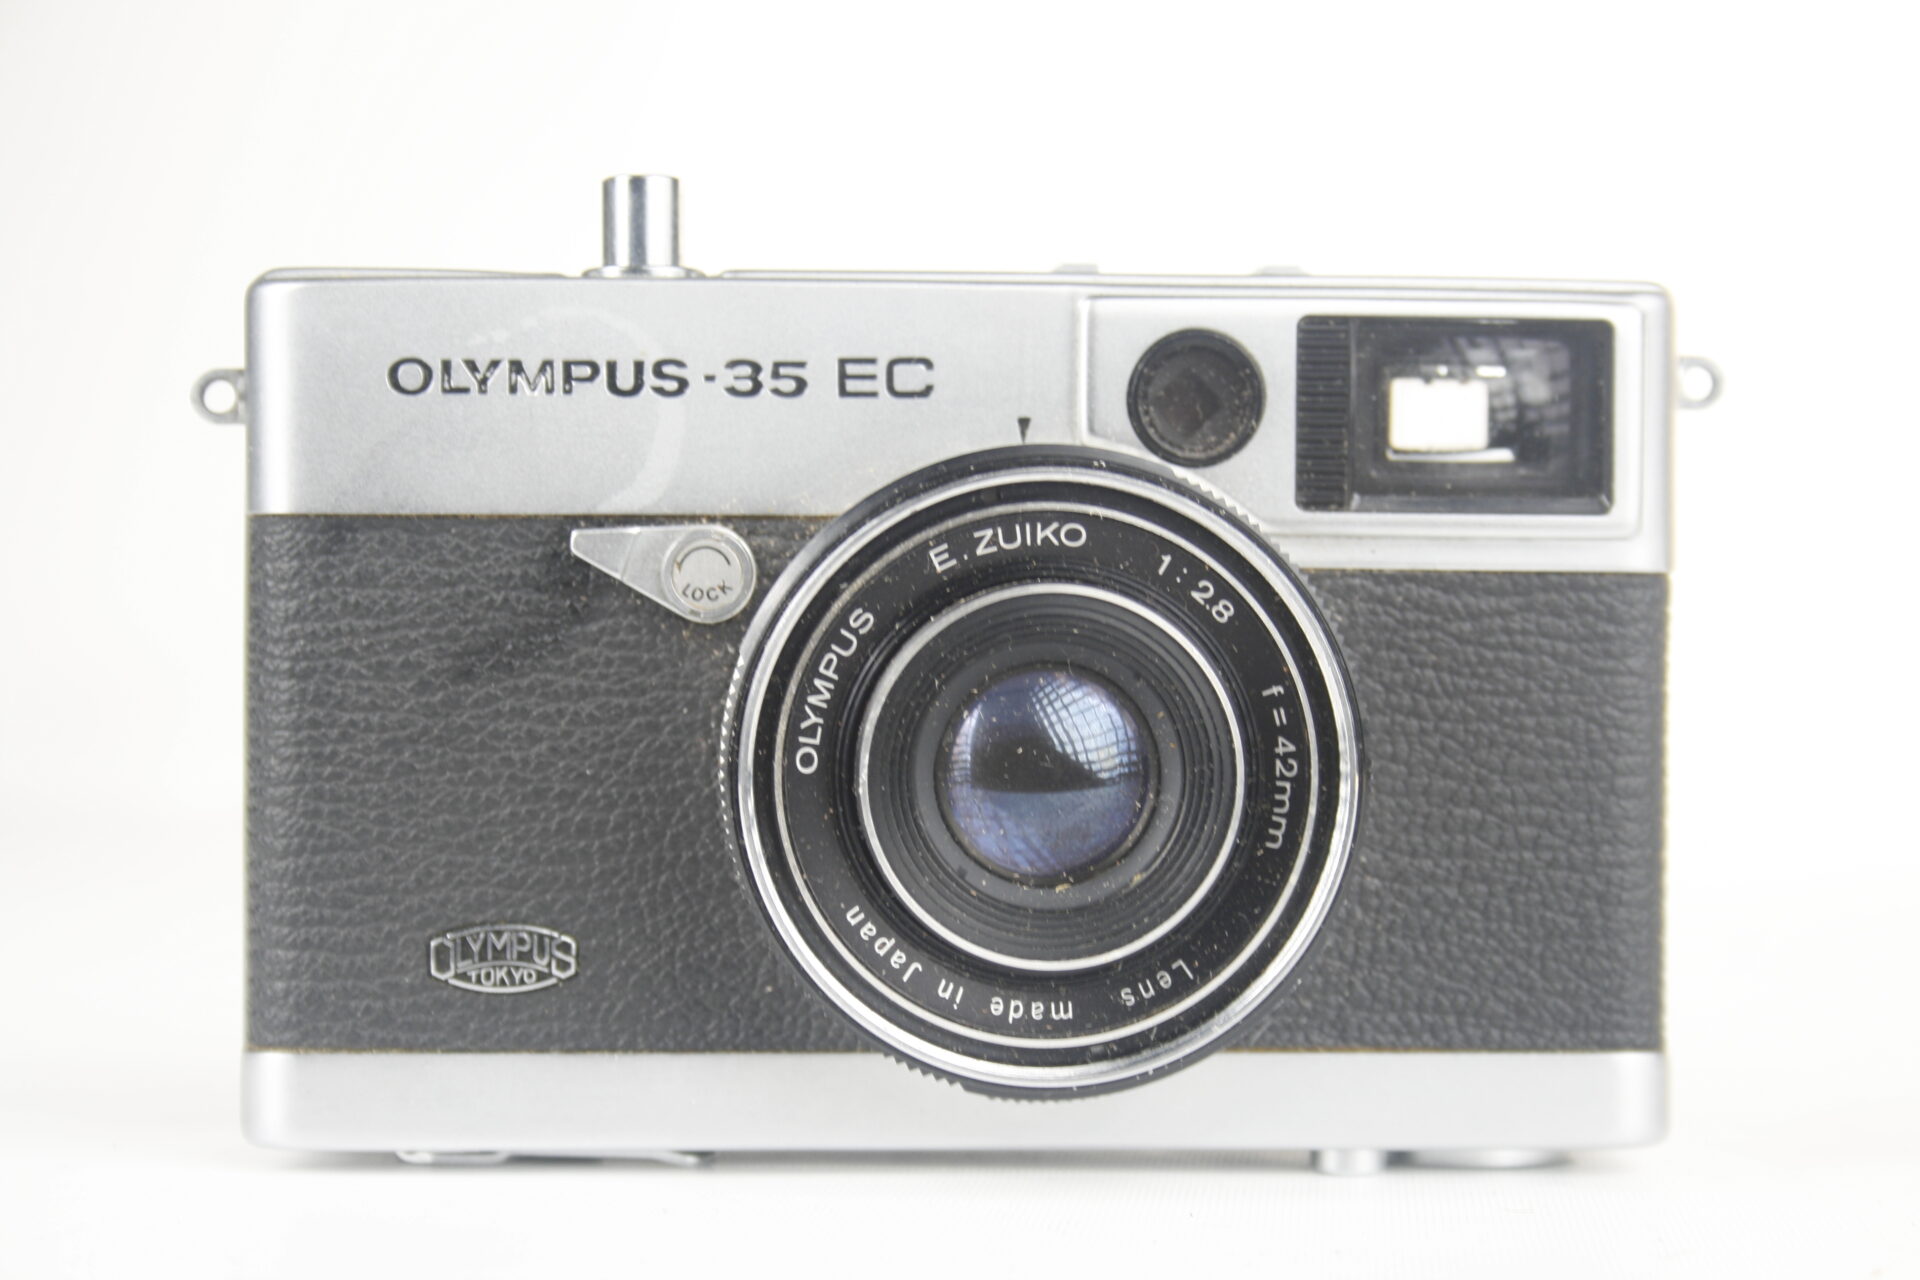 Olympus-35 EC. 35mm compact camera. 1969. Japan.